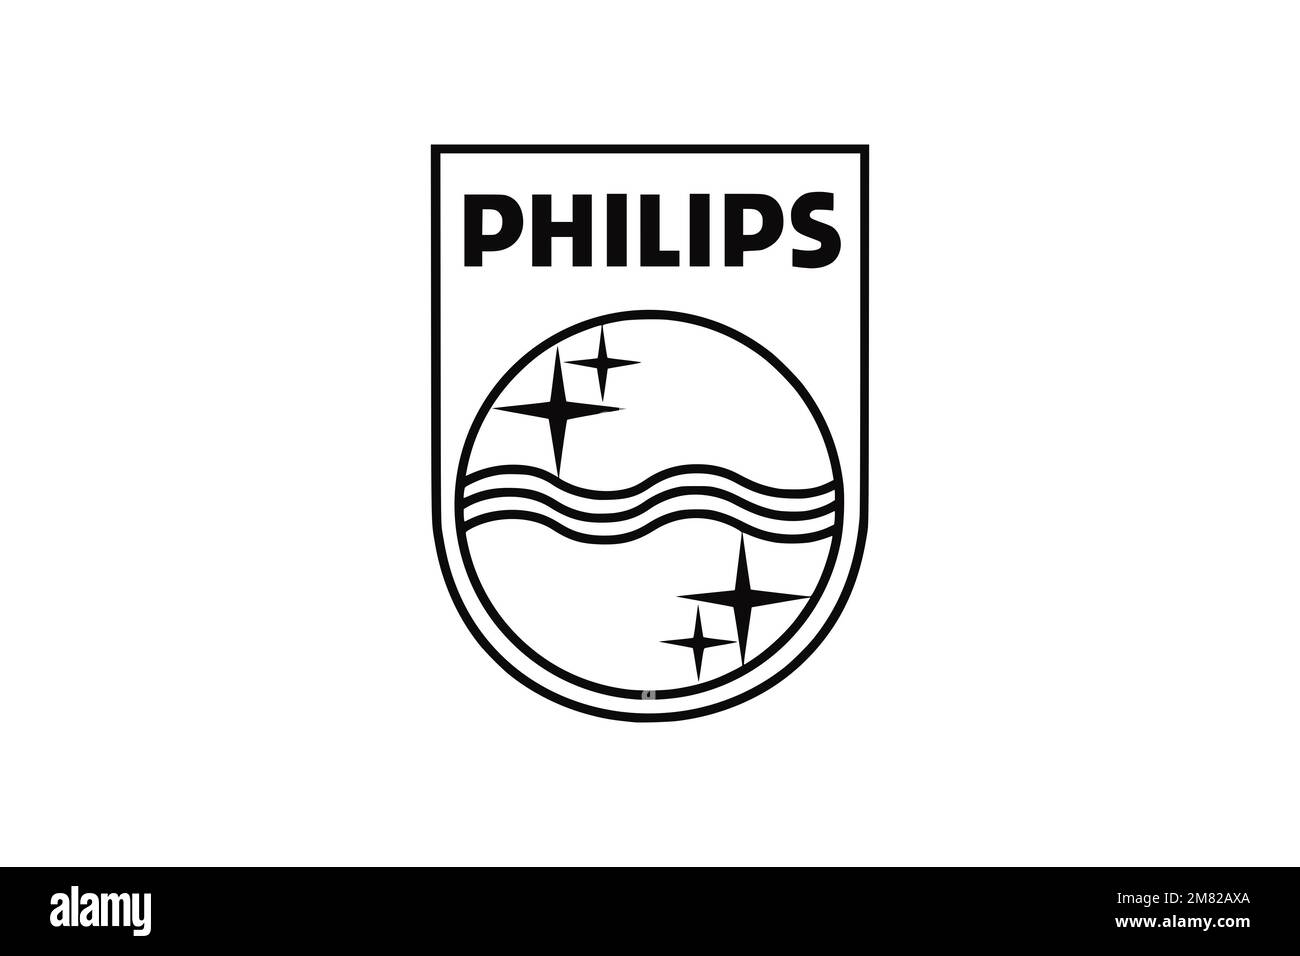 Philips logo Black and White Stock Photos & Images - Alamy